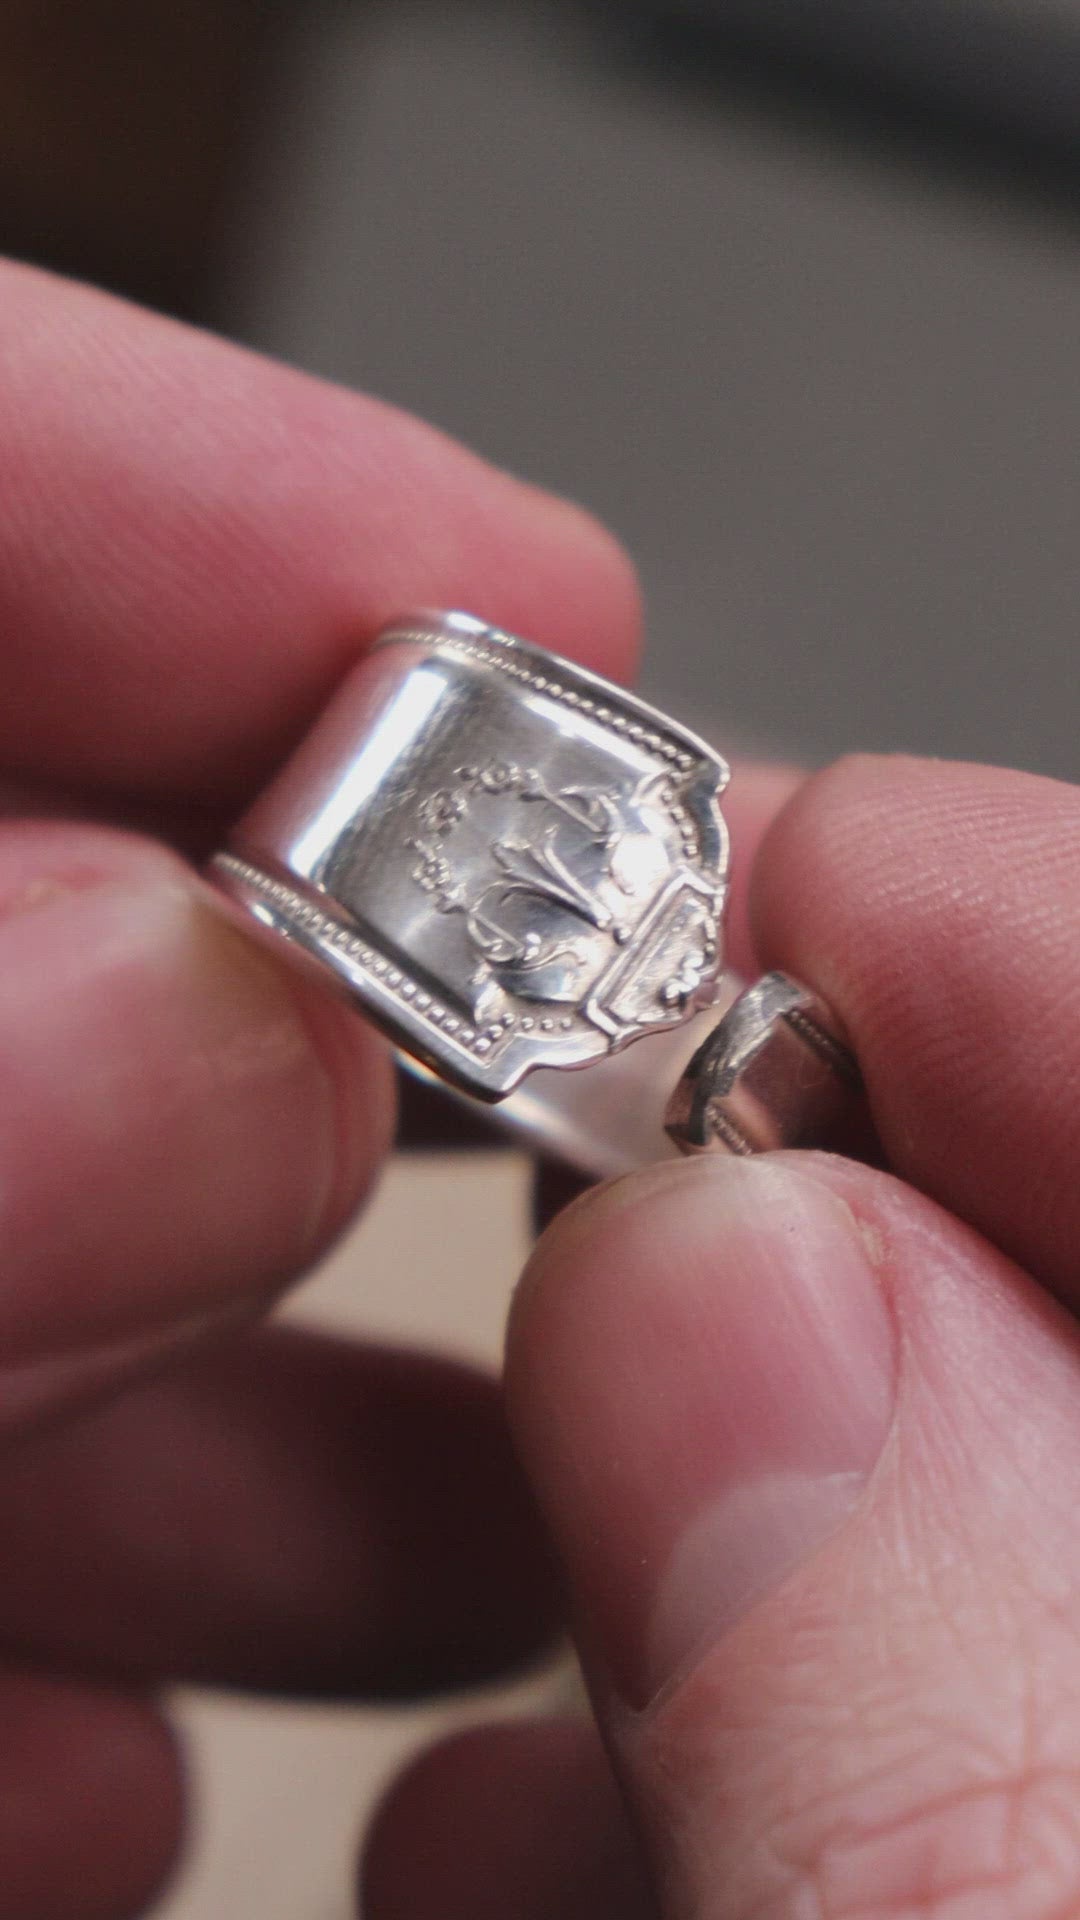  KINGSEESUN Ring Bender Superior Ring Bending Tool & Nylon Dies  Ring Sizer Measuring Tool Ring Making Tool Make Perfect Rings in Seconds